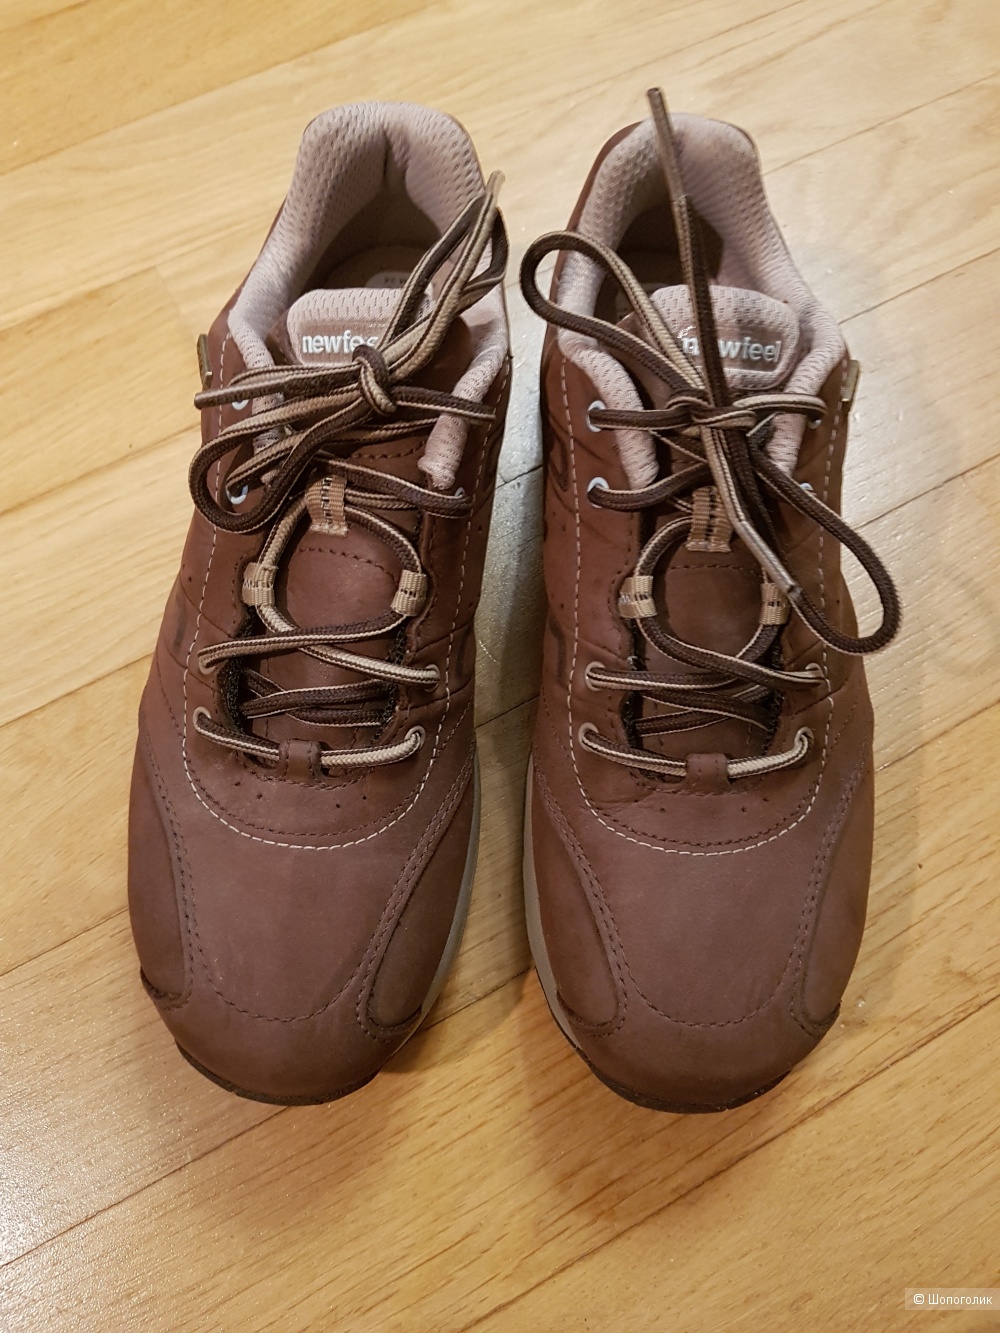 Кожаные ботинки Newfeel, унисекс, рр 38